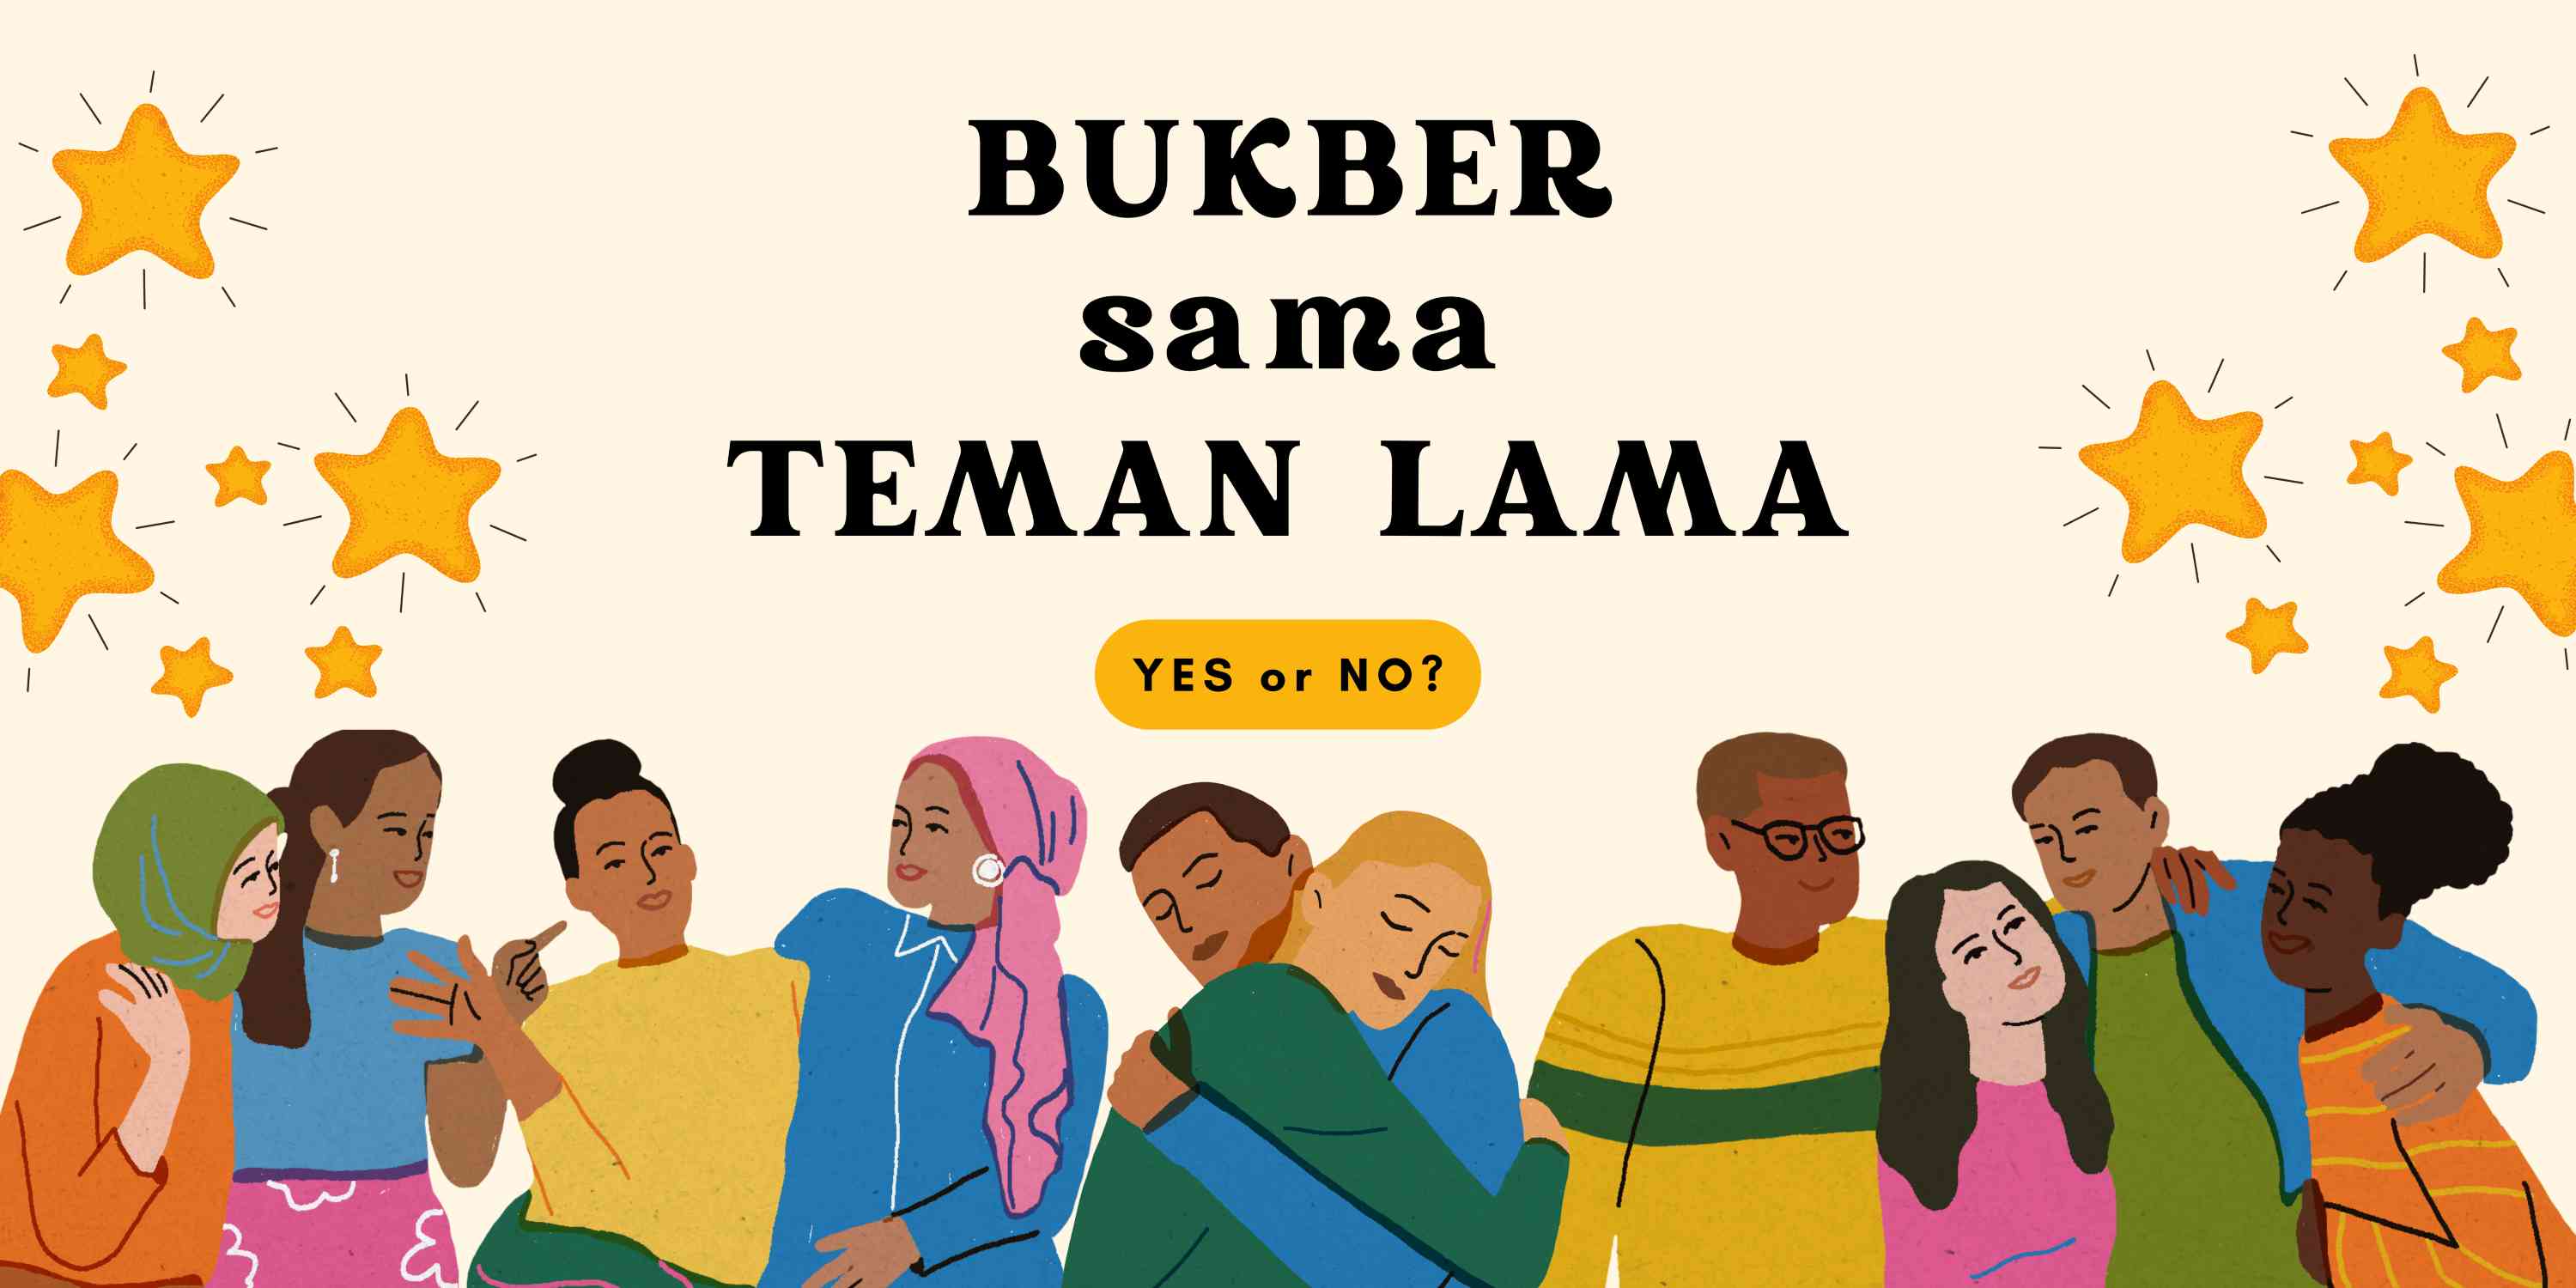 Bukber Sama Teman Lama, Yes or No?